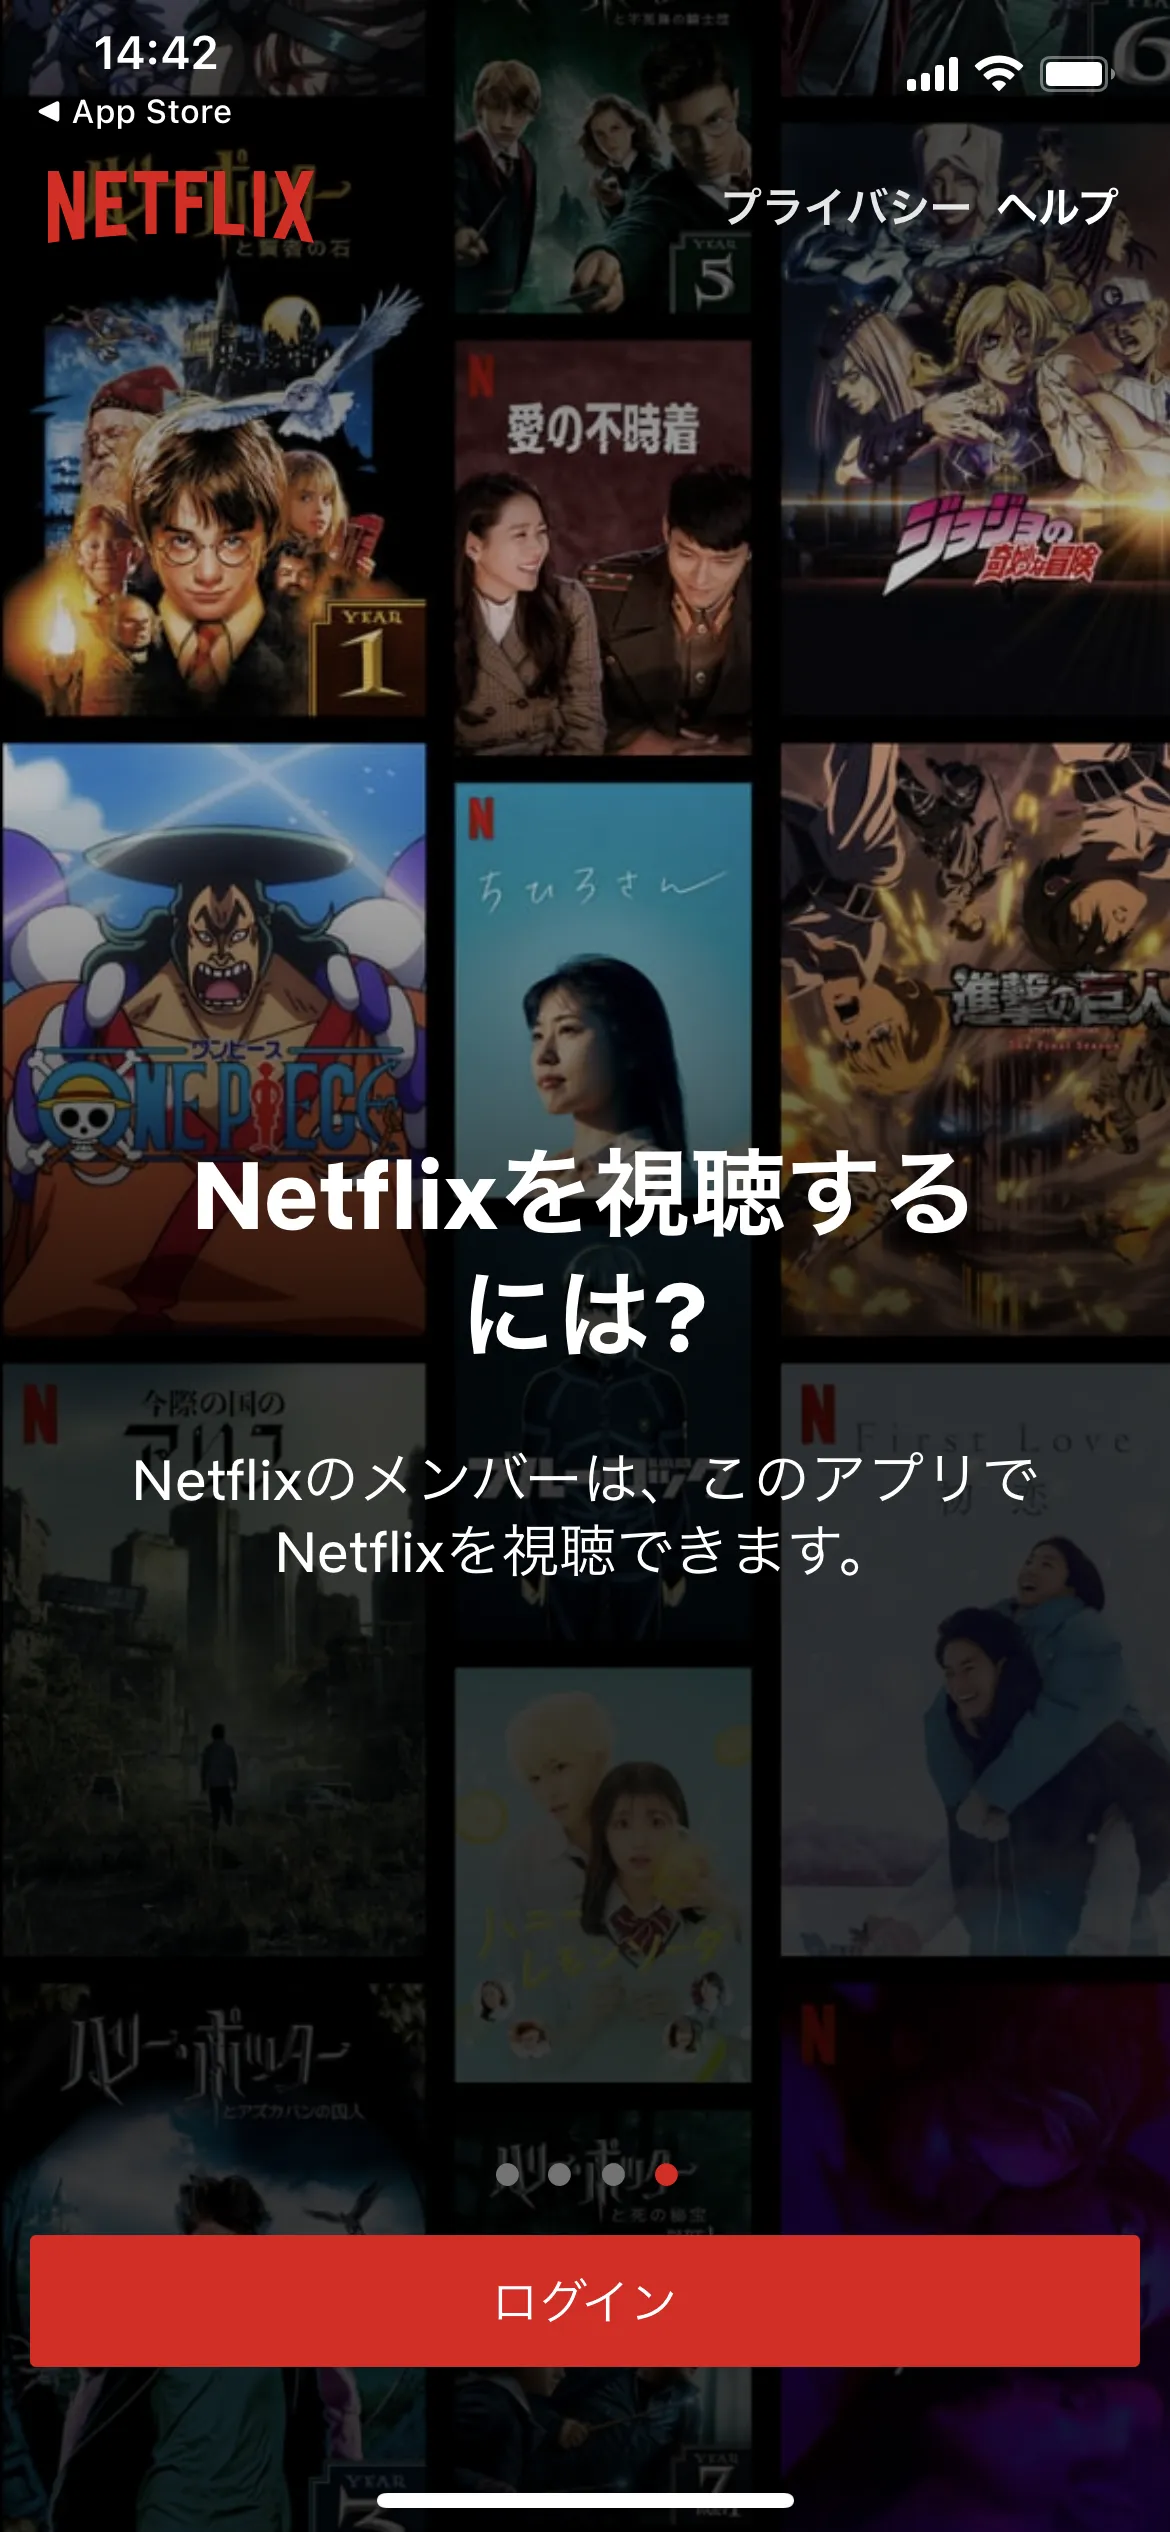 Netflix オンボーディング screen